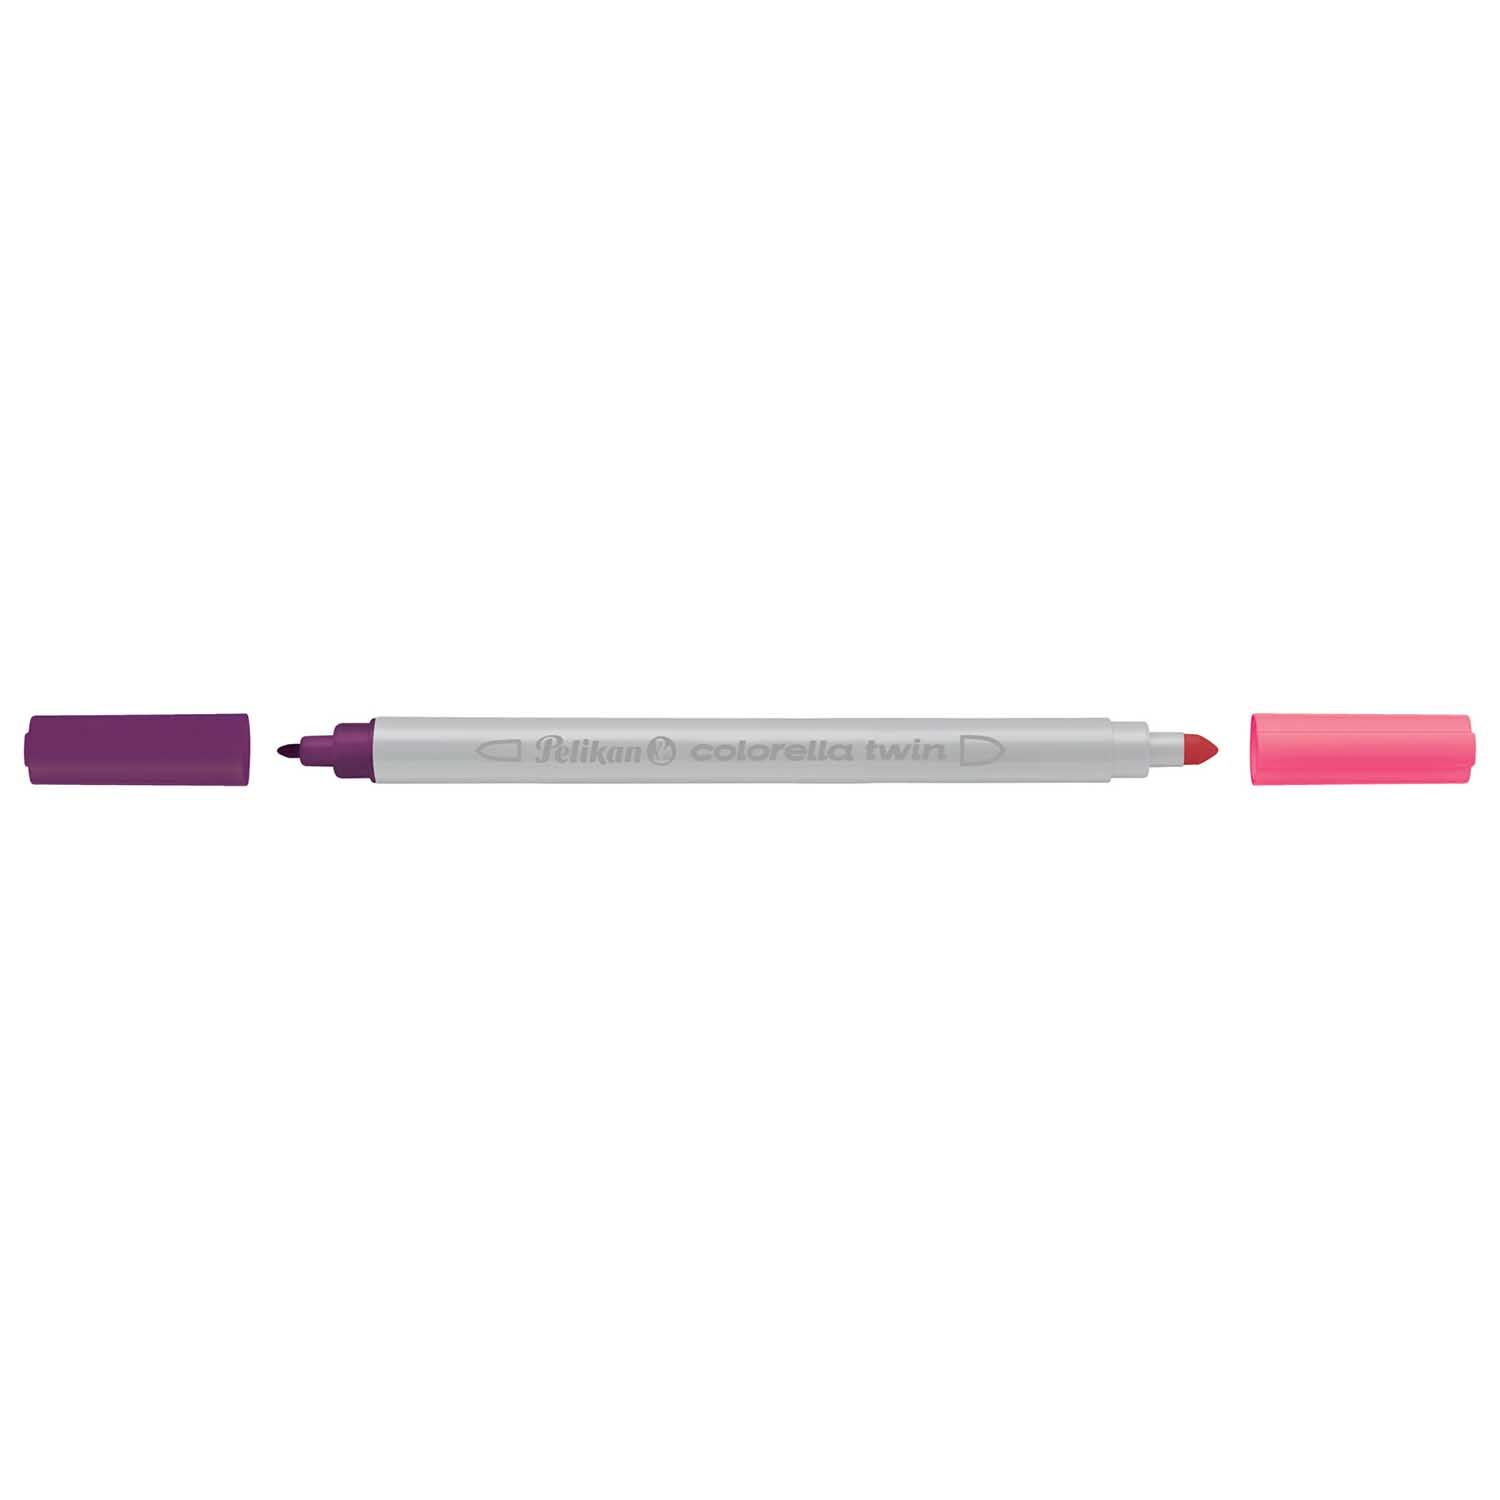 NEU Pelikan Filzstifte / Fasermaler Colorella Twin, 10 Stifte mit 20 Farben Bild 2